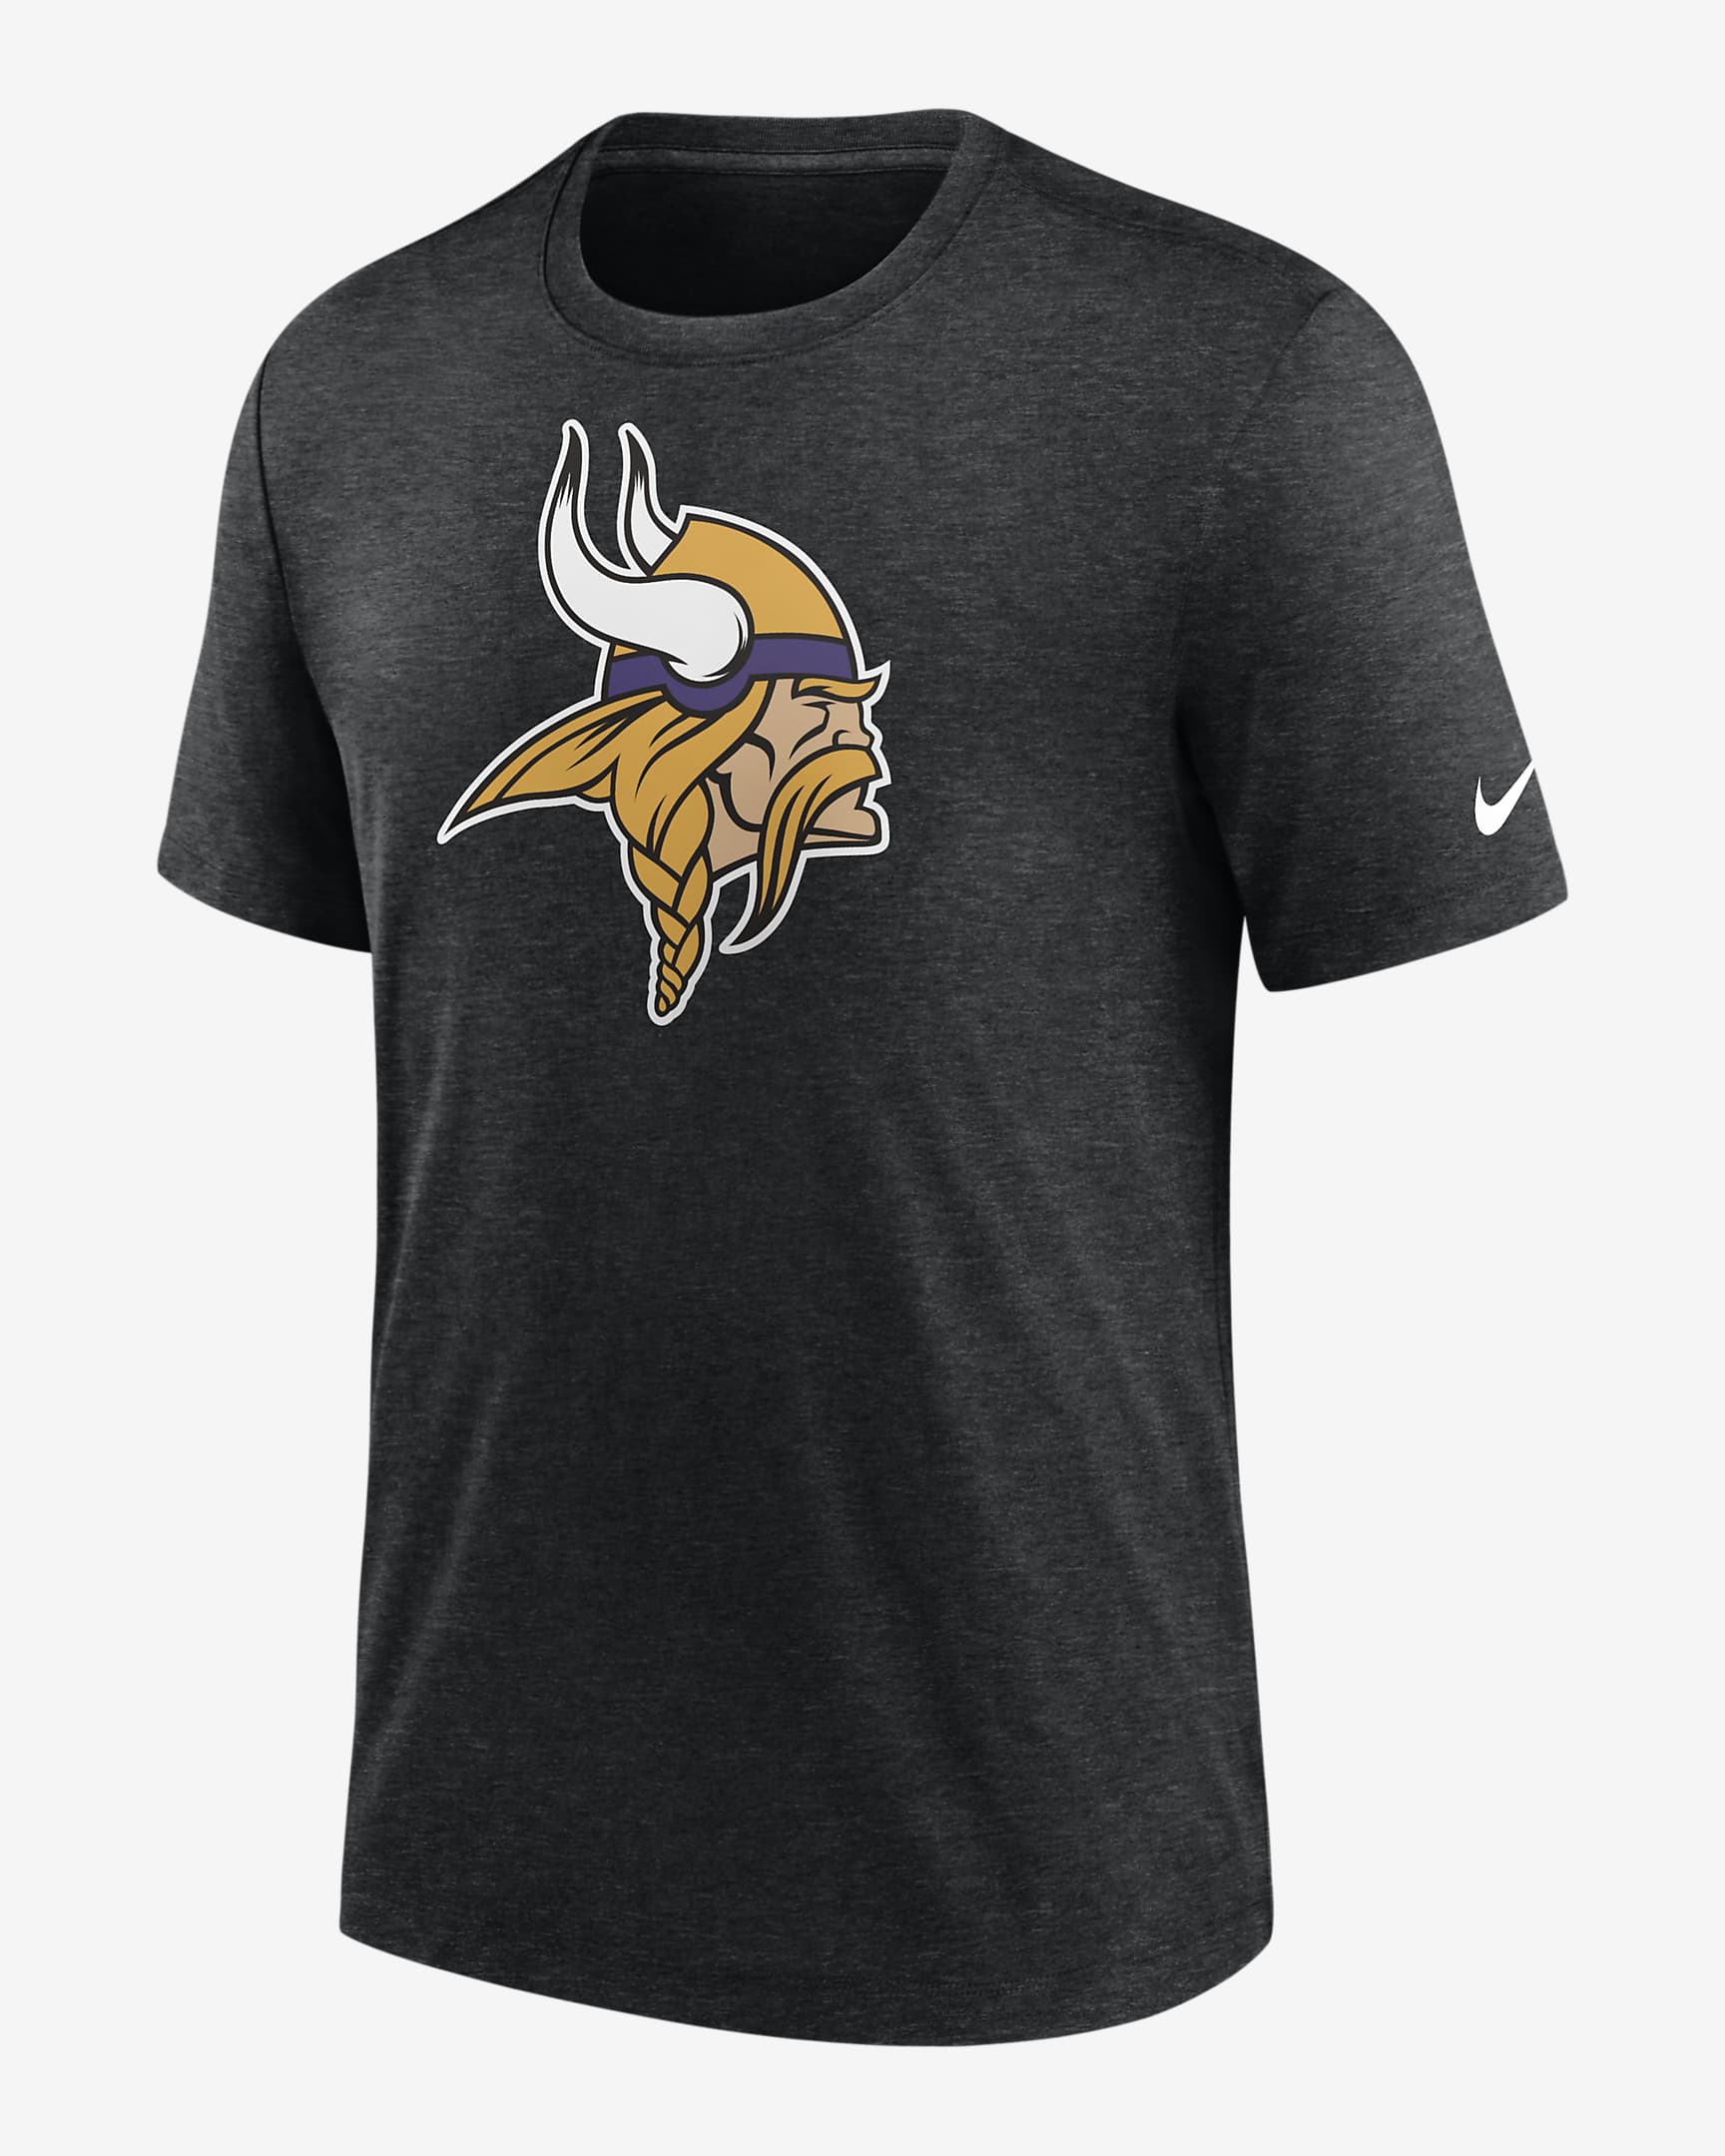 Playera Nike de la NFL para hombre Minnesota Vikings Rewind Logo. Nike.com